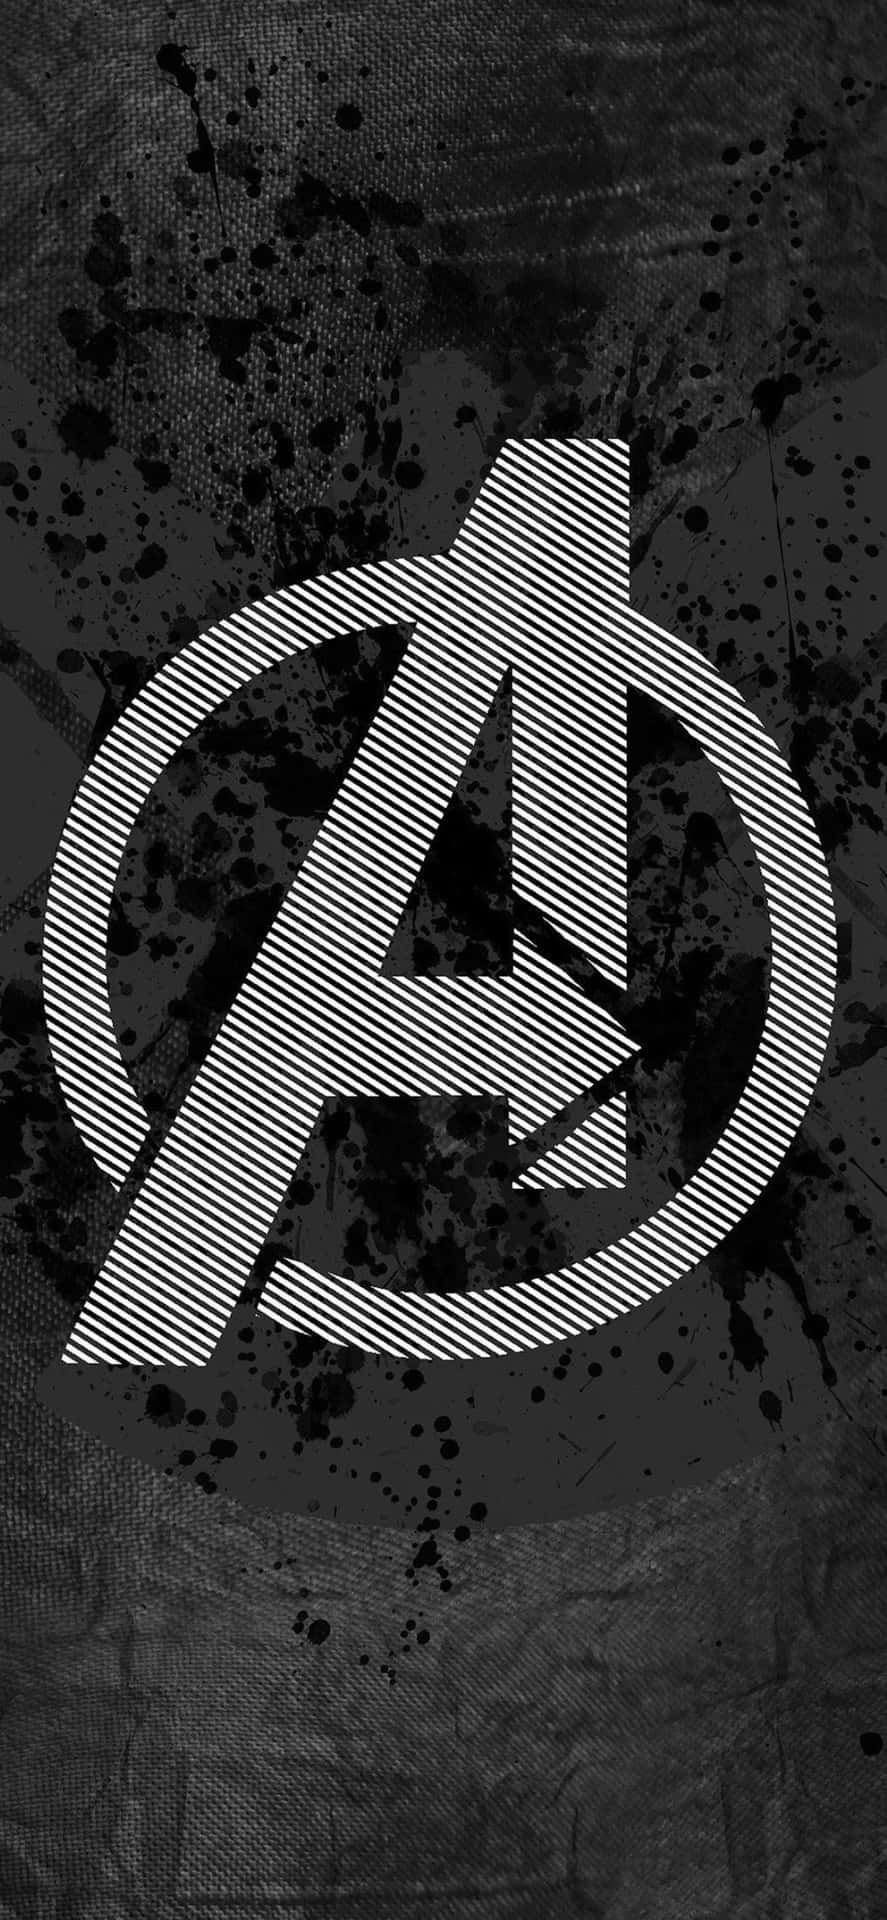 Iphonexs Texturerad Bakgrund Med Avengers Logotypen.